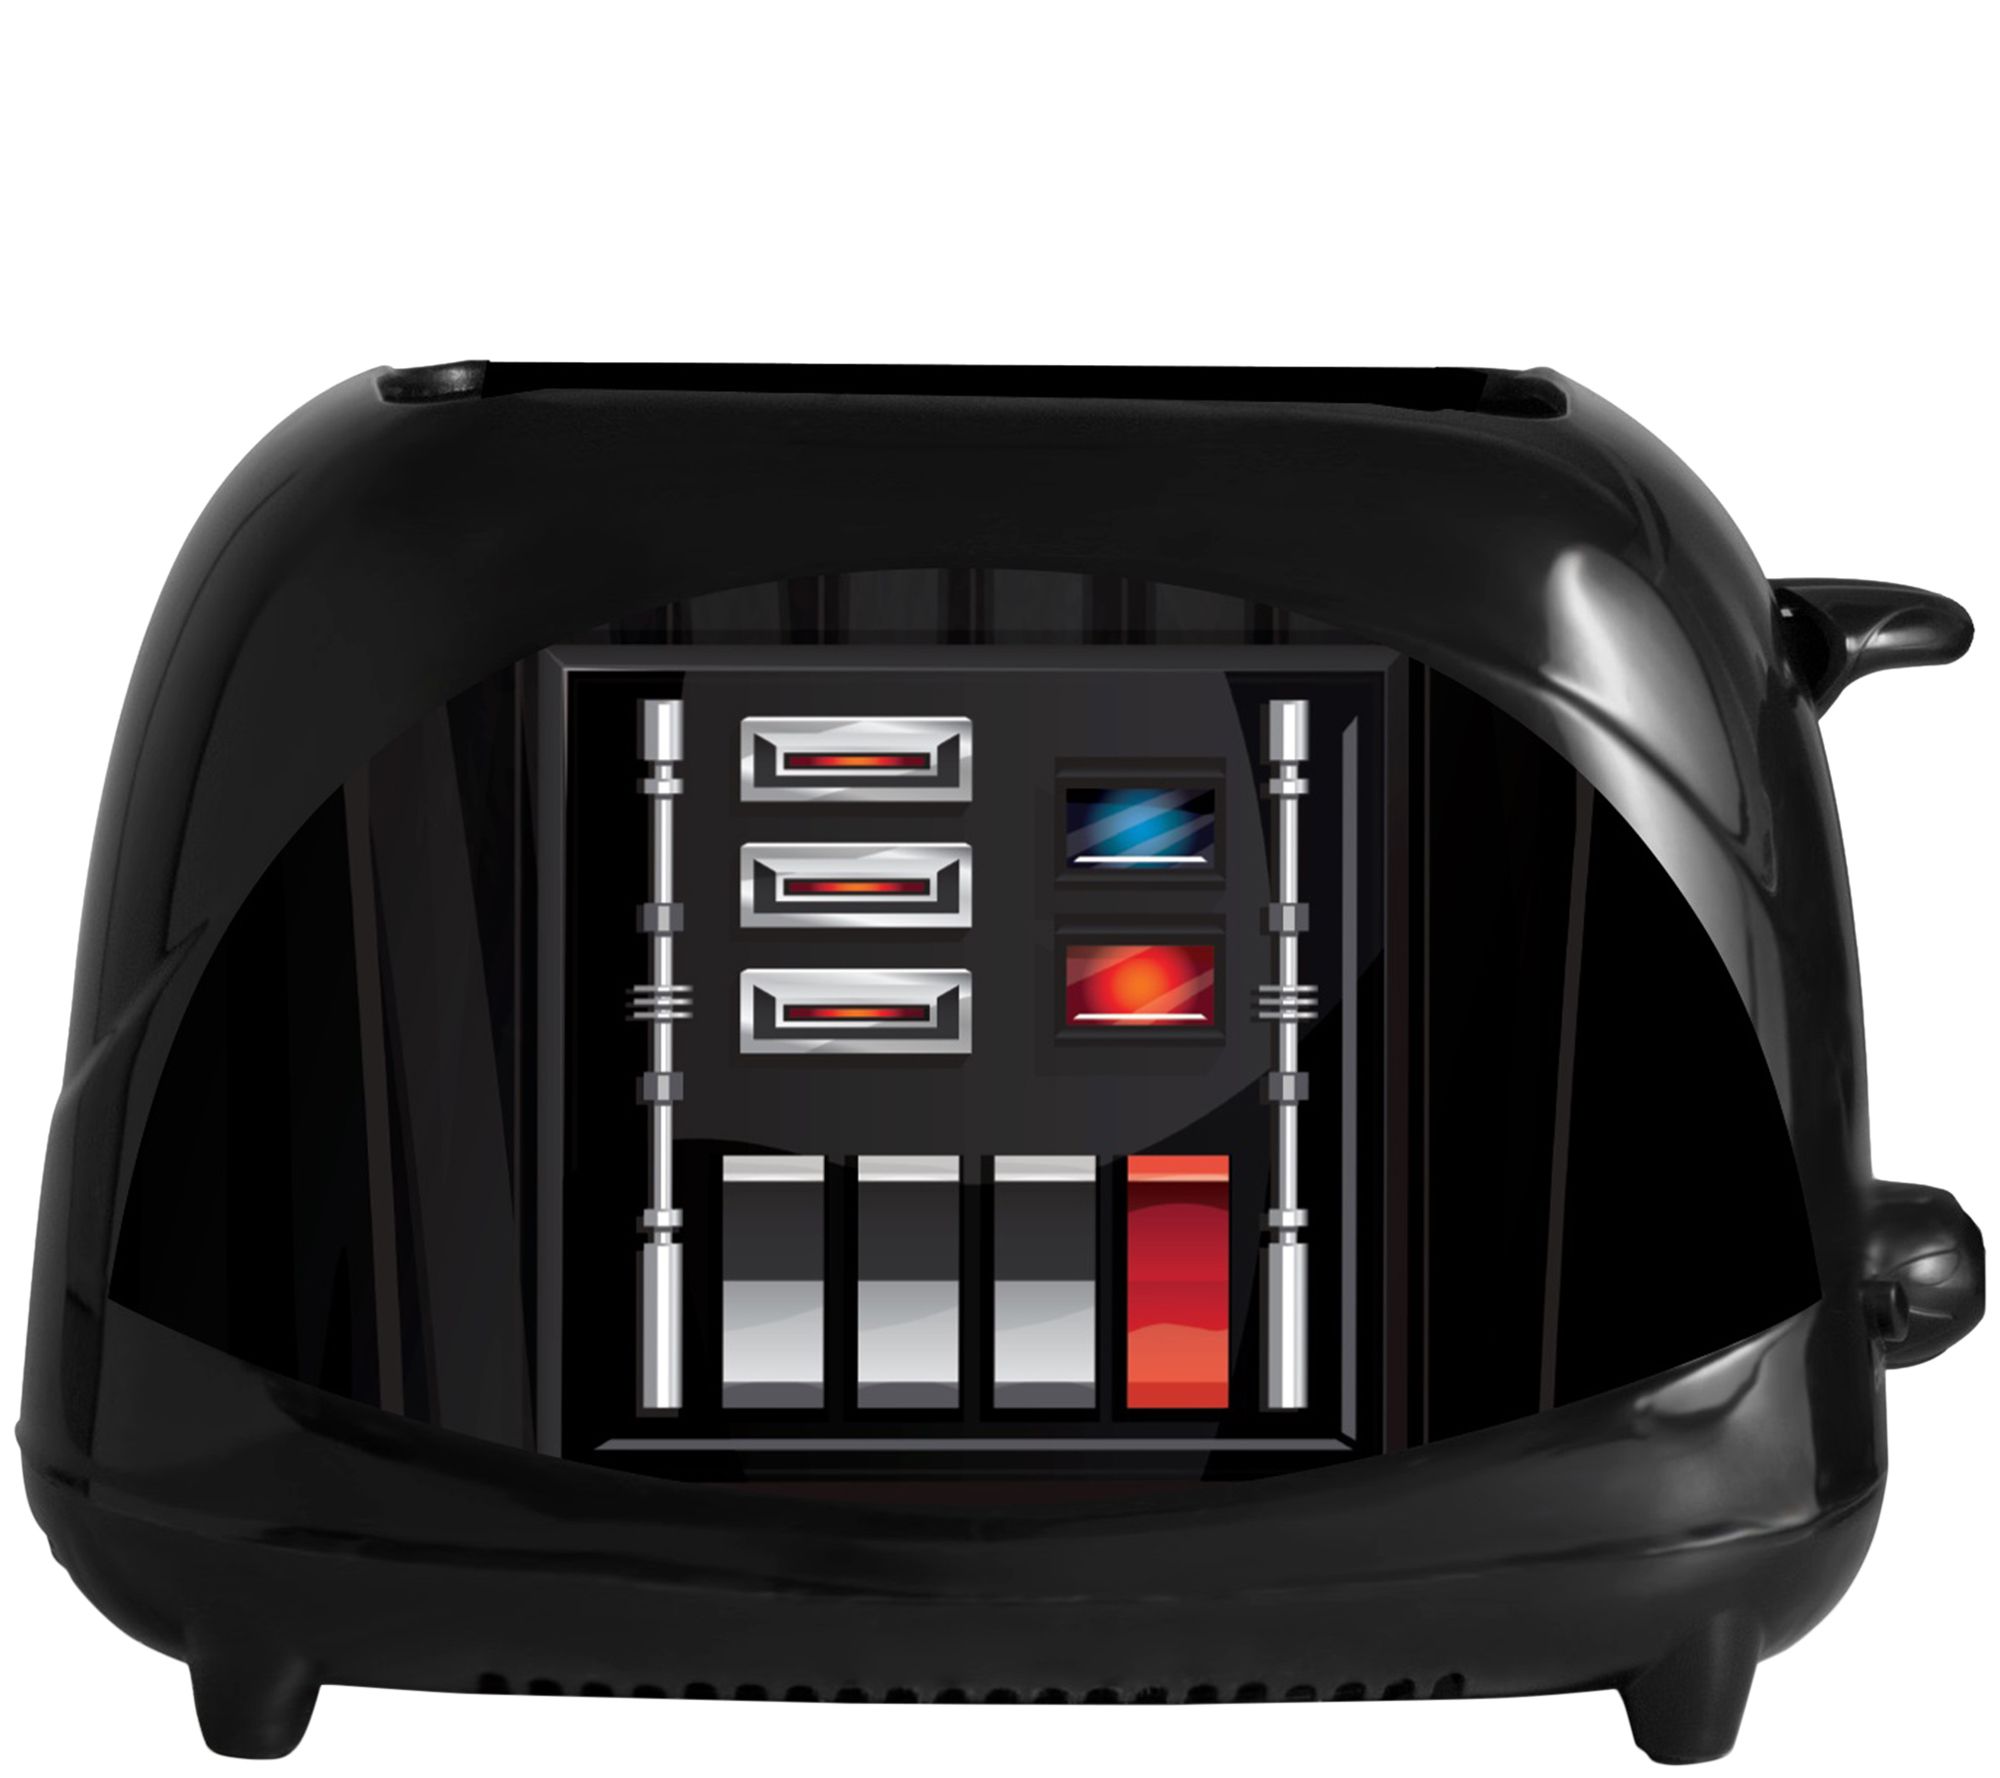 Disney Star Wars Darth Vader Toaster - Brand New in Box - Free Shipping!!!